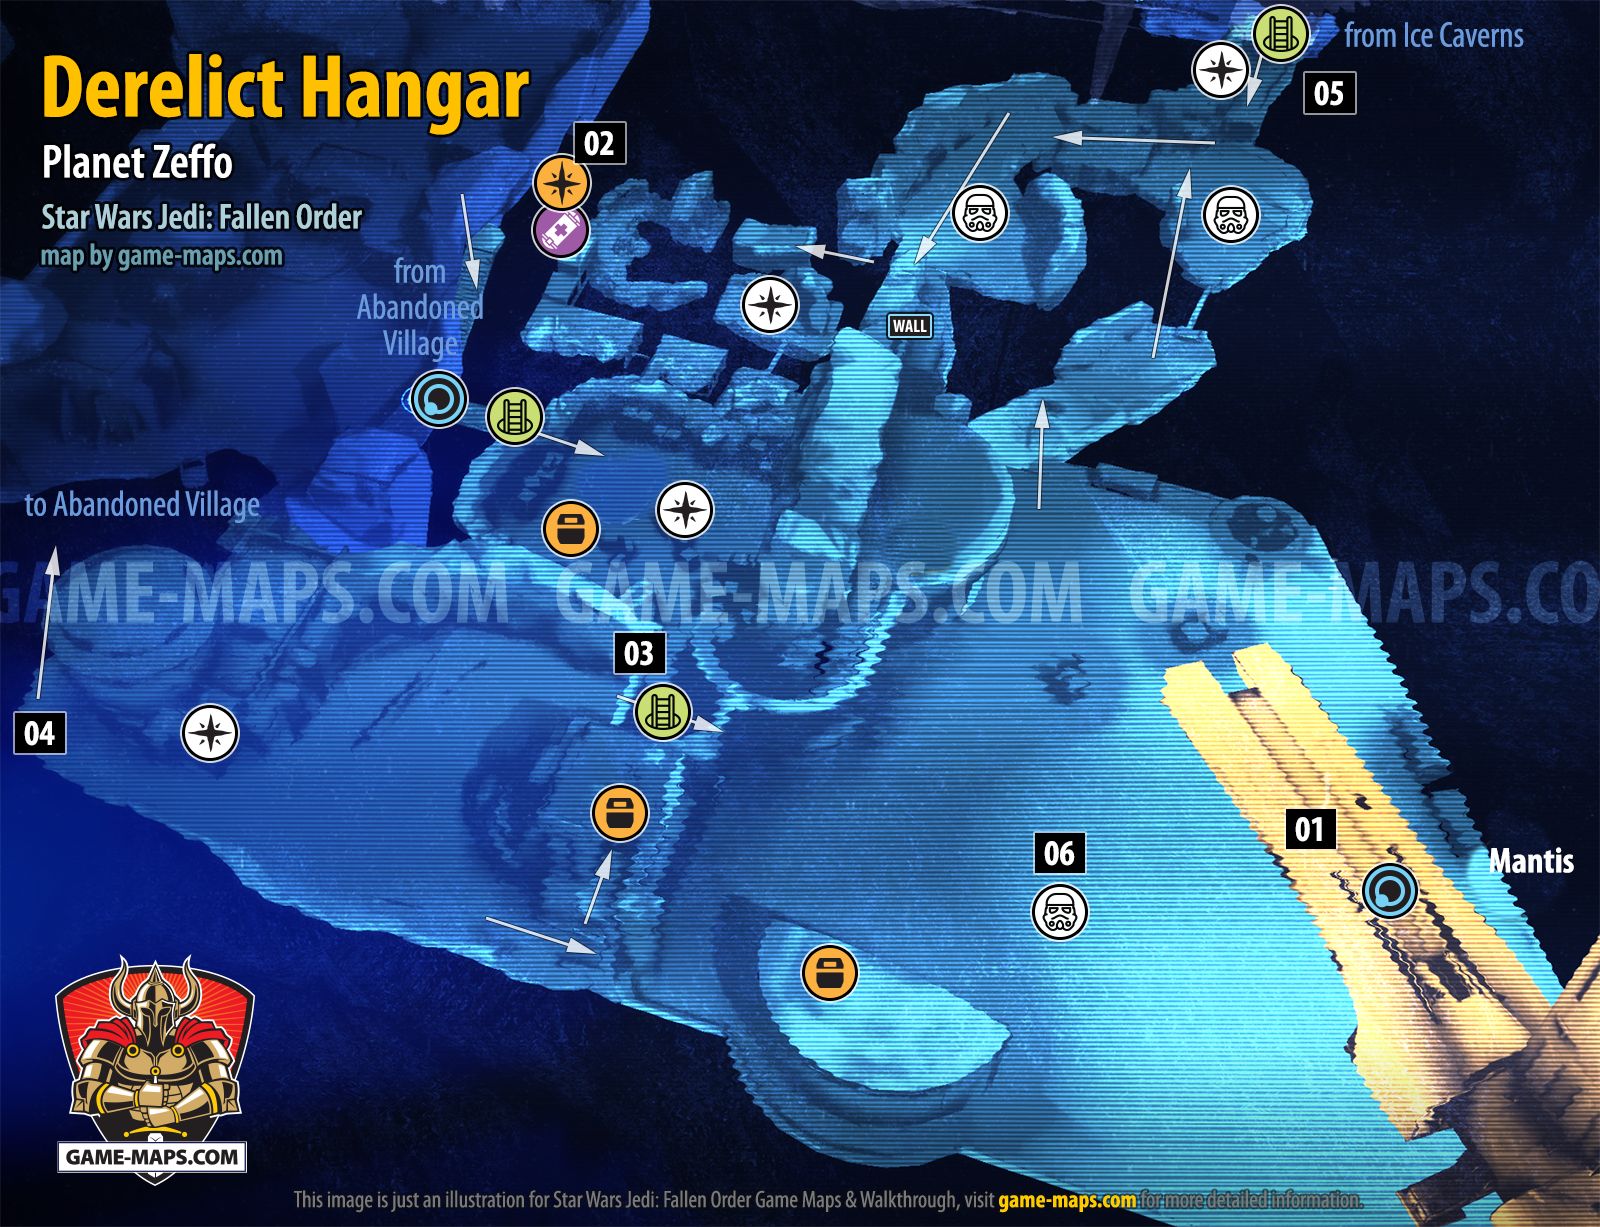 Derelict Hangar Map, Planet Zeffo for Star Wars Jedi Fallen Order